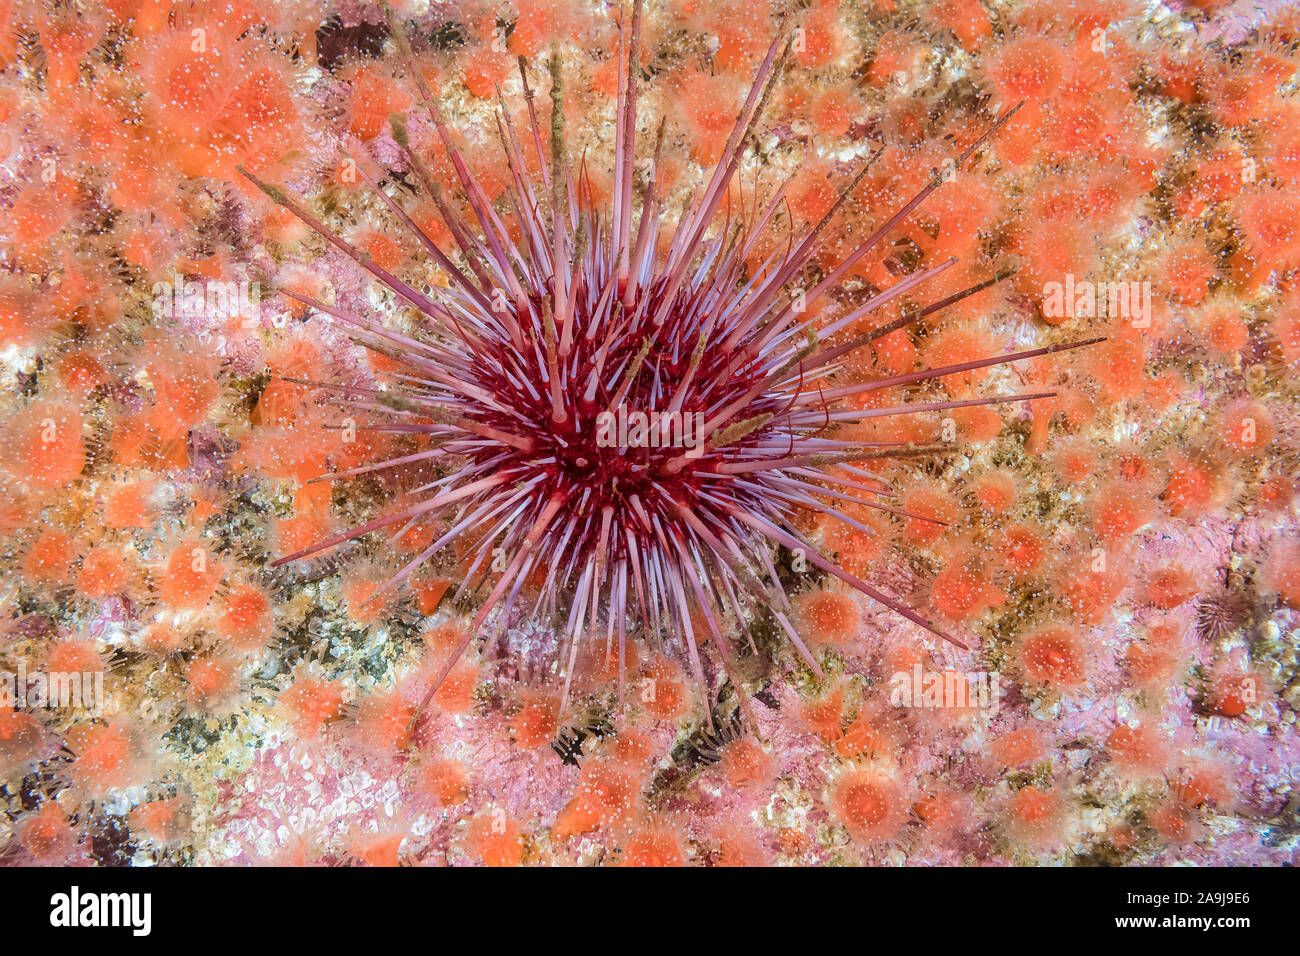 red sea urchin, Mesocentrotus franciscanus, strawberry anmone, Corynactis californica, and encrusting coralline algae, Barkley Sound, Vancouver Island Stock Photo